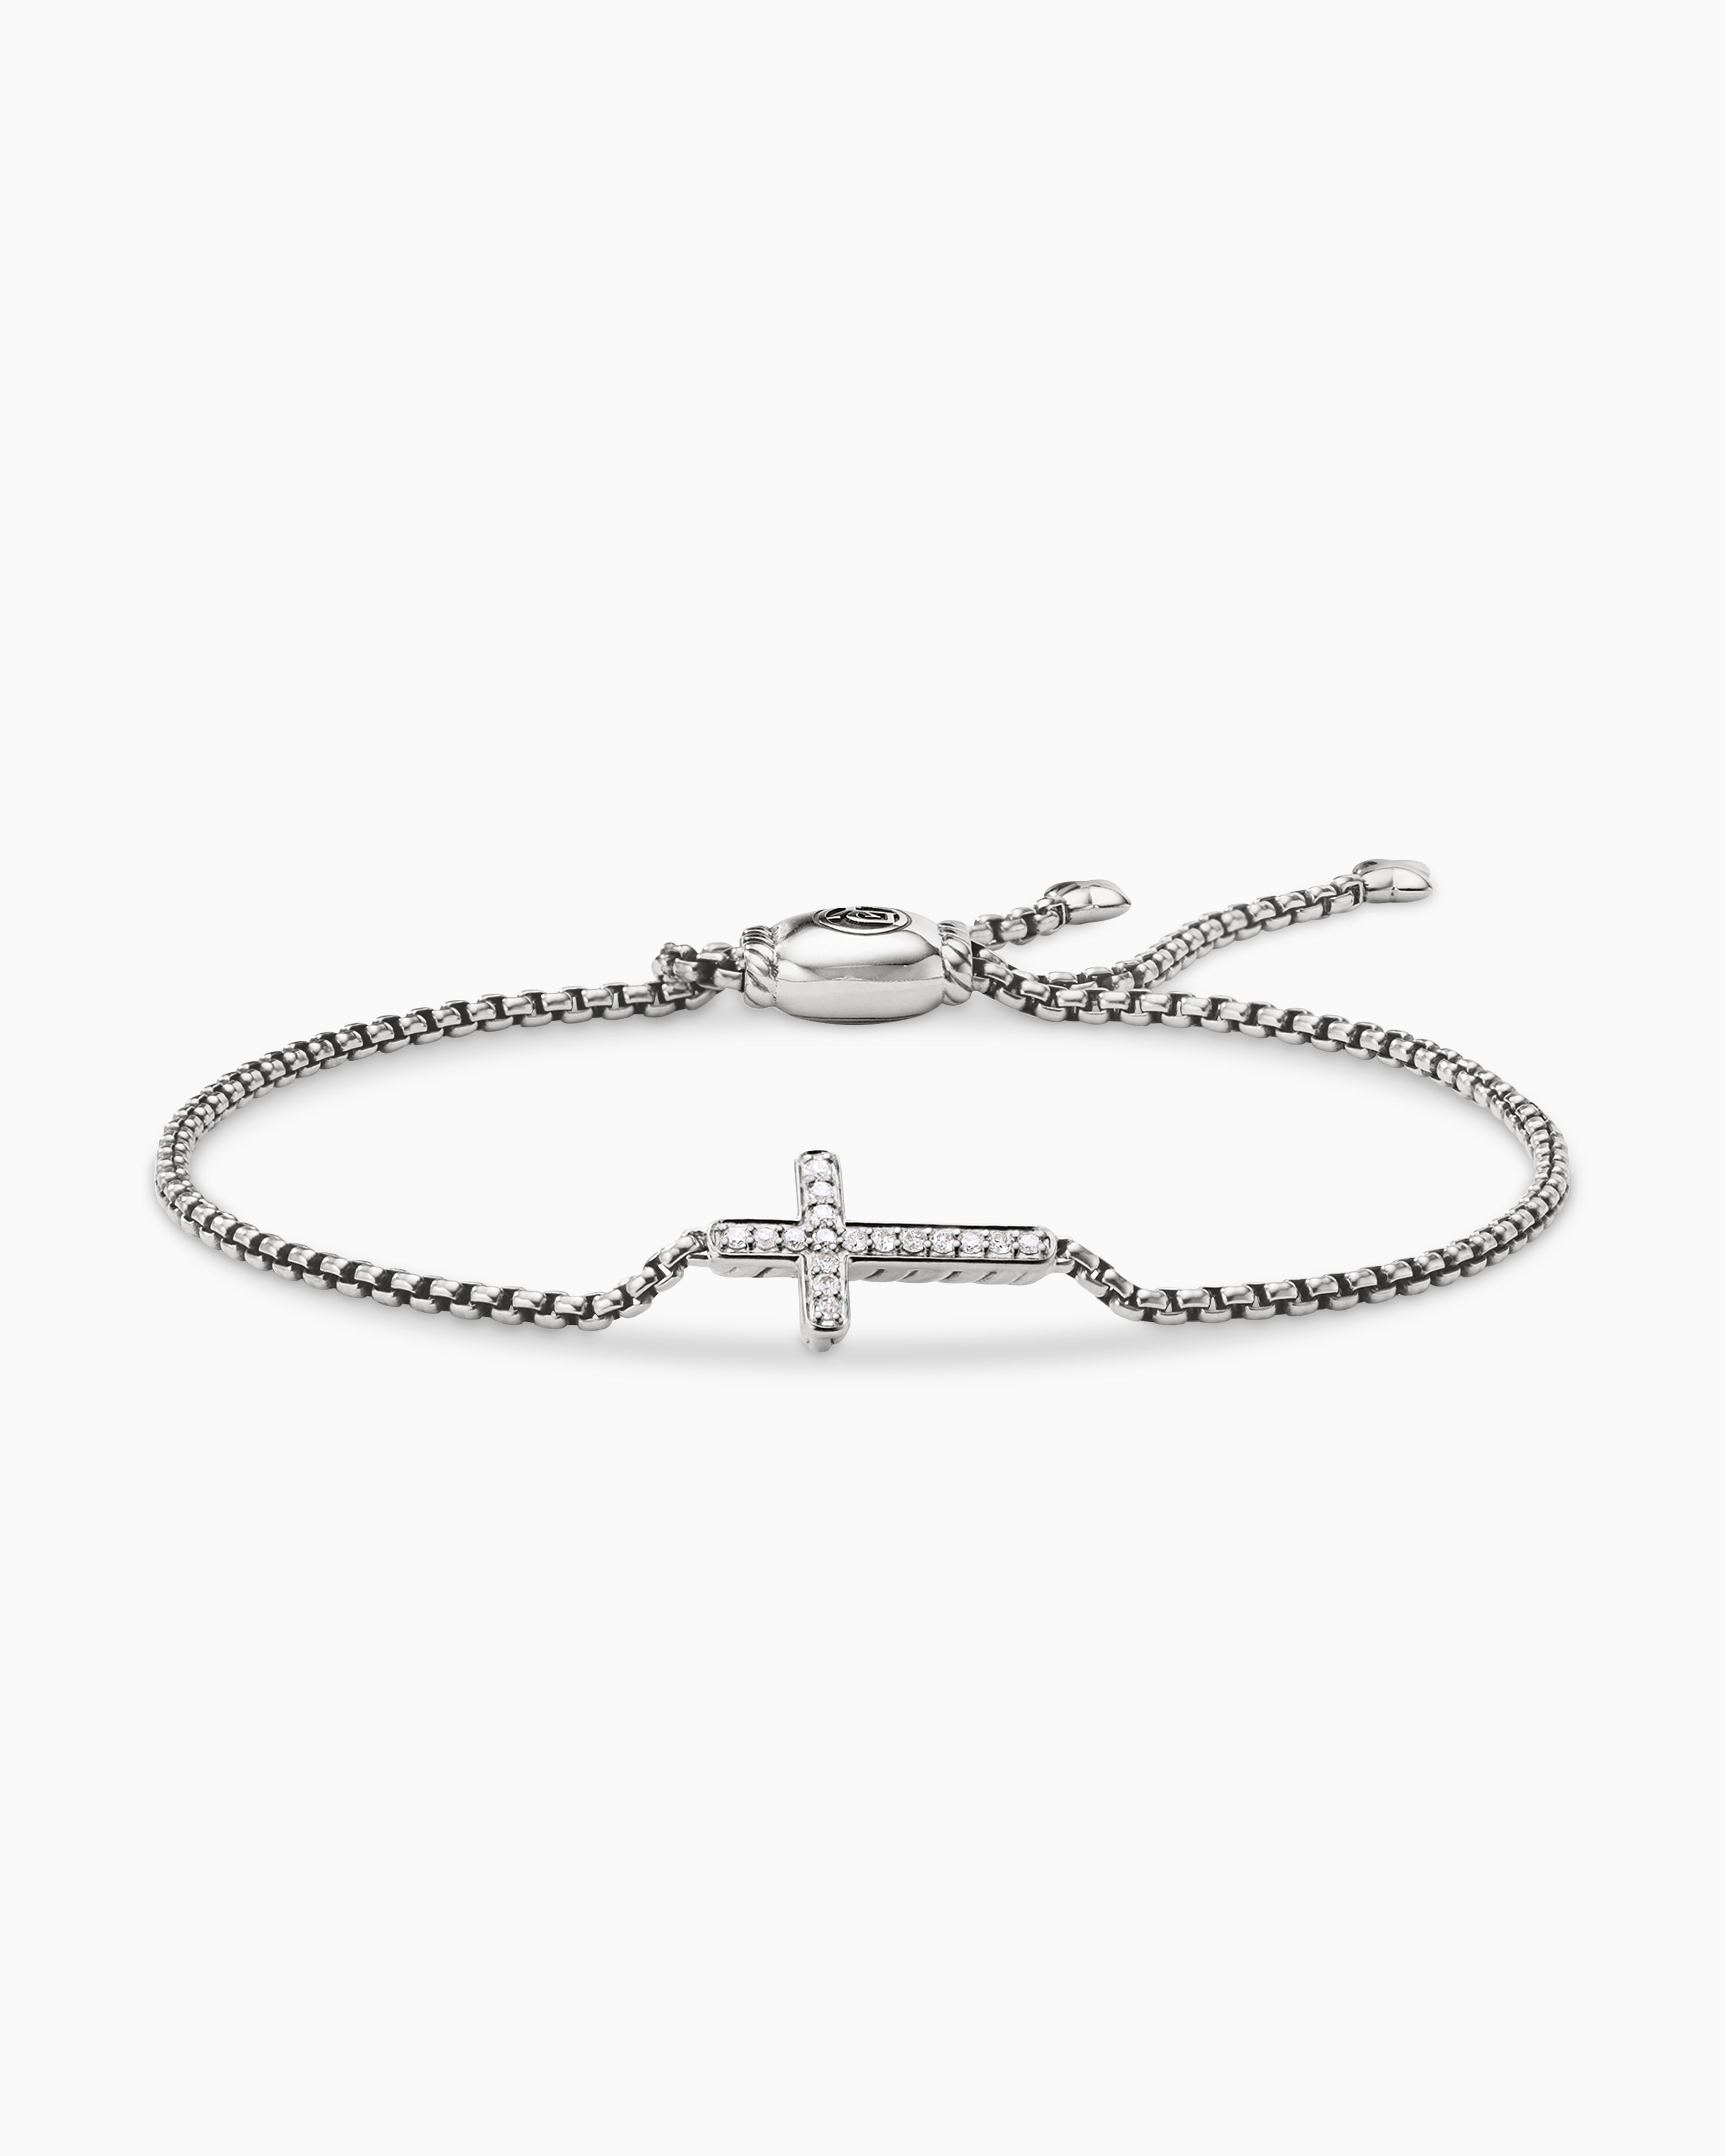 David Yurman Sterling Silver 14k Gold & Diamond Crossover Ladies Bracelet  Size M | eBay